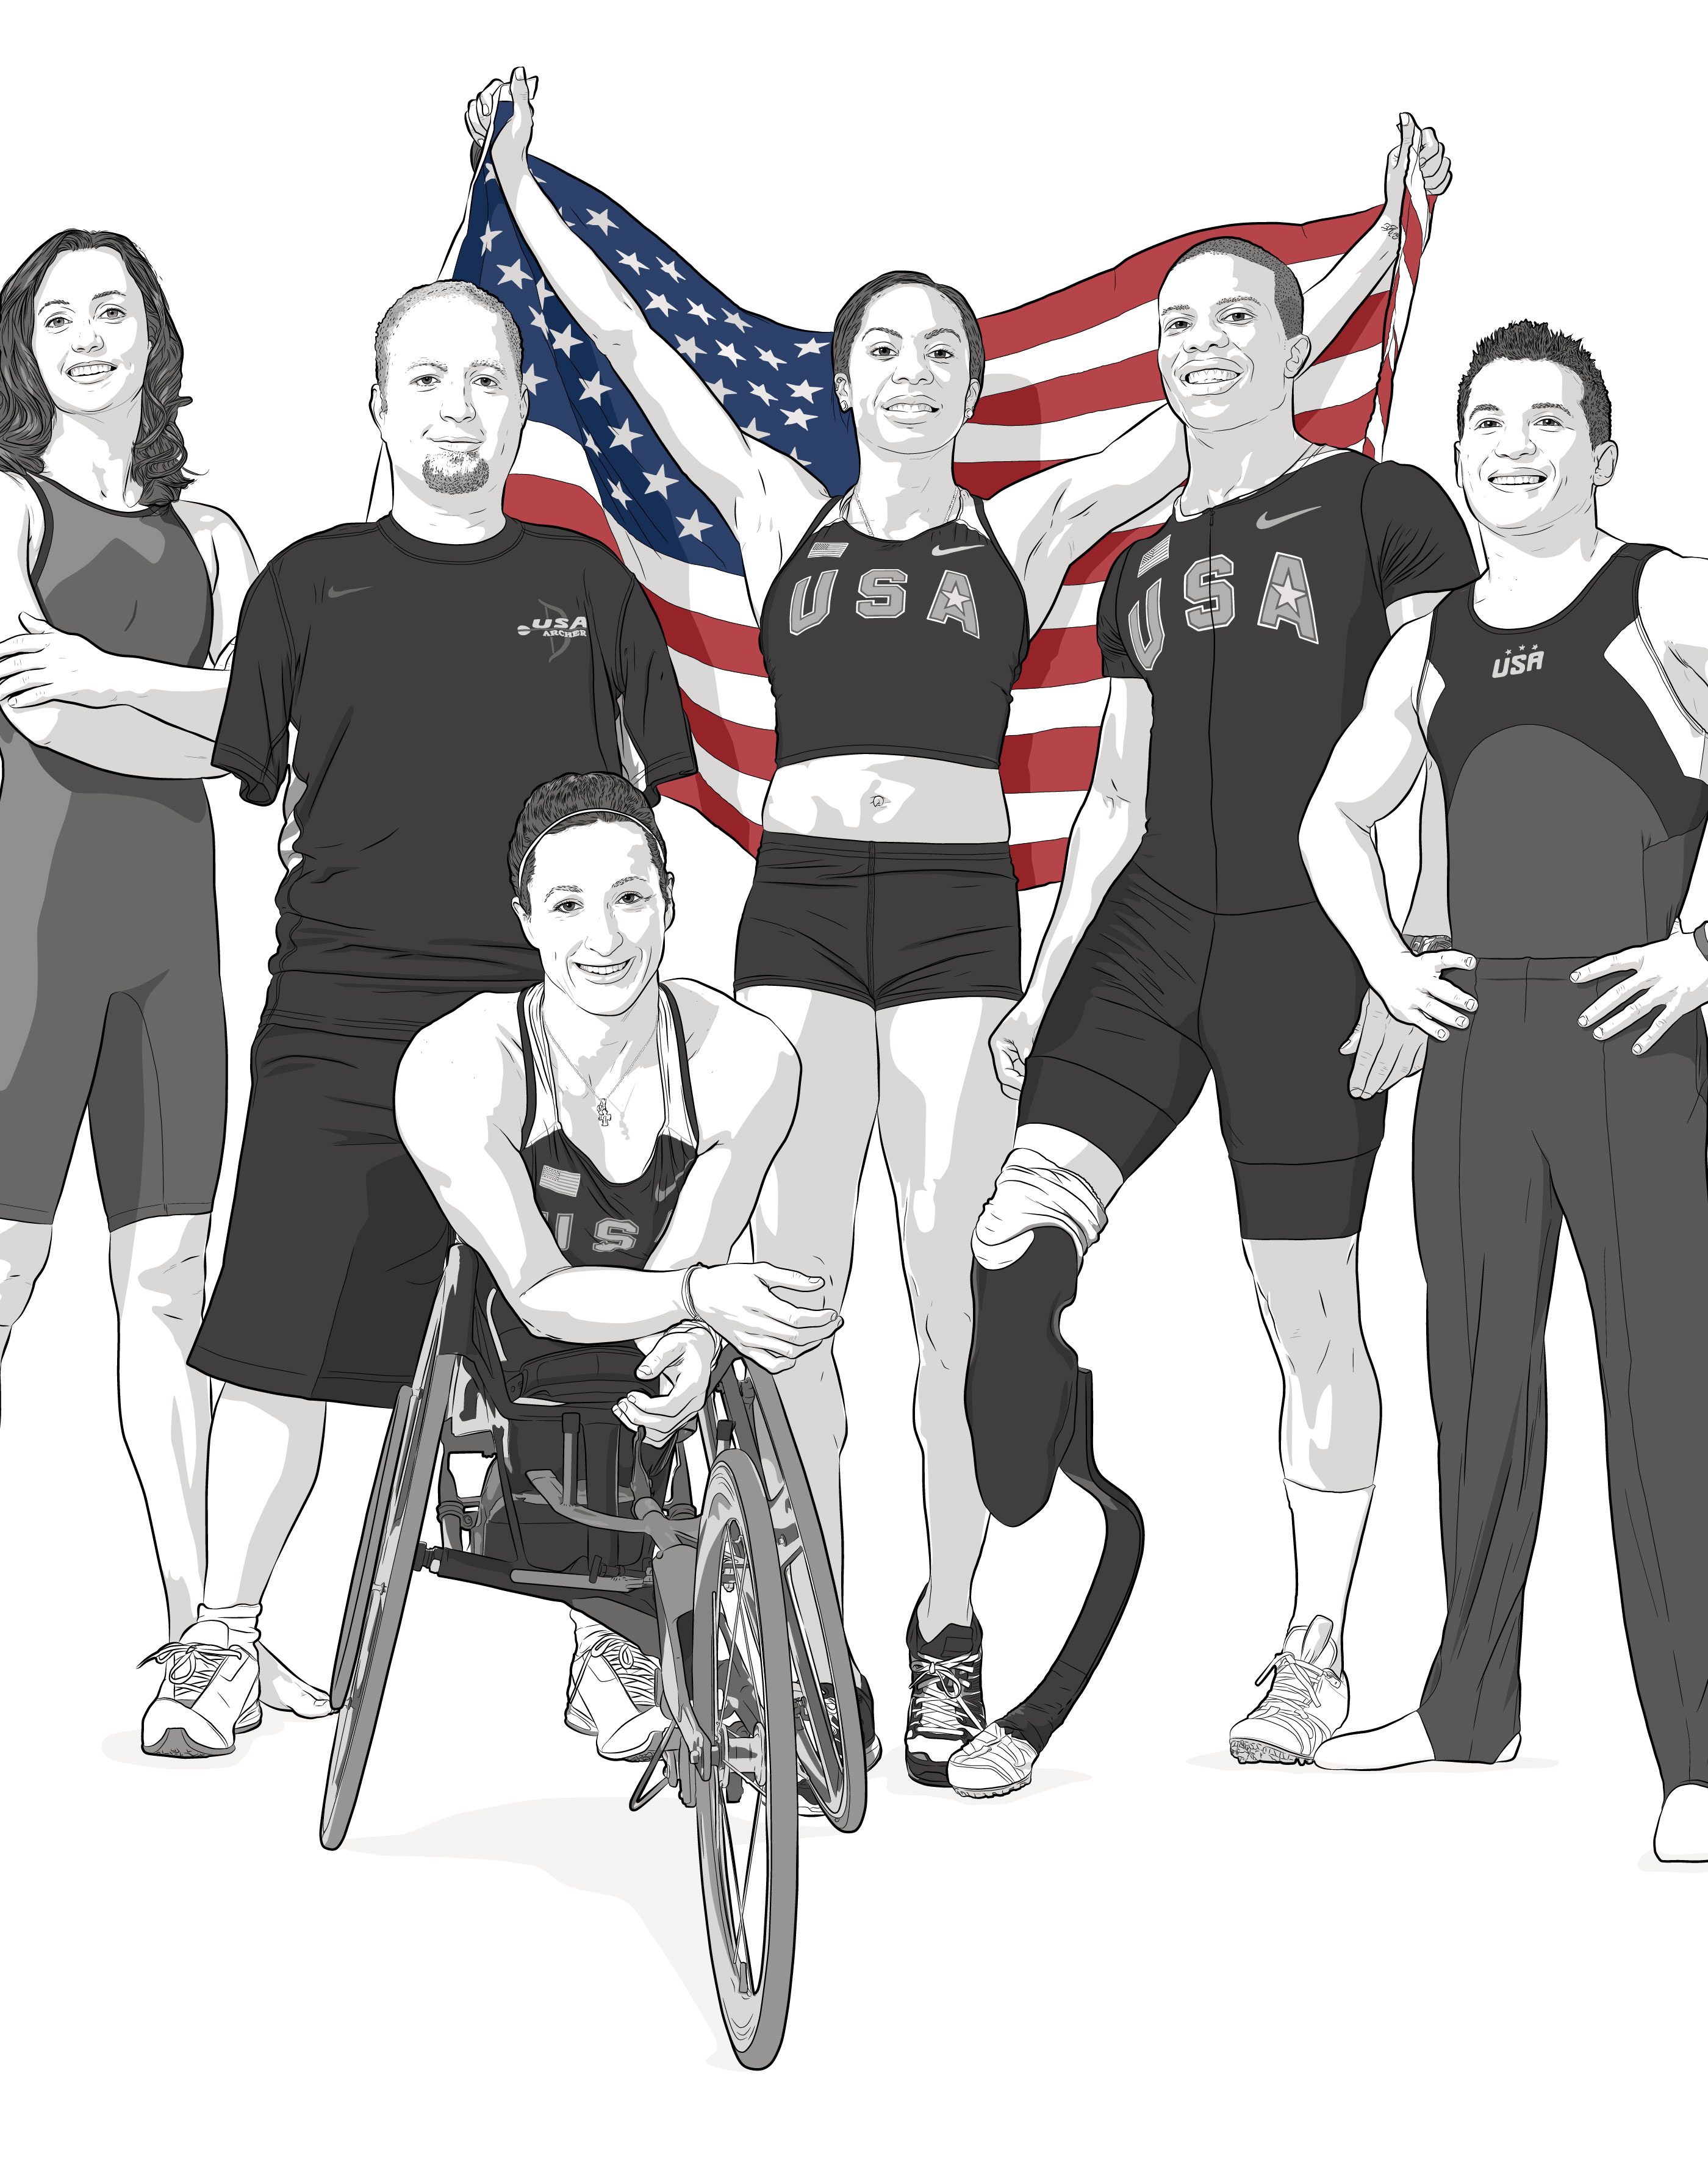 BP's Team USA Athletes pose, illustration by Max Hancock